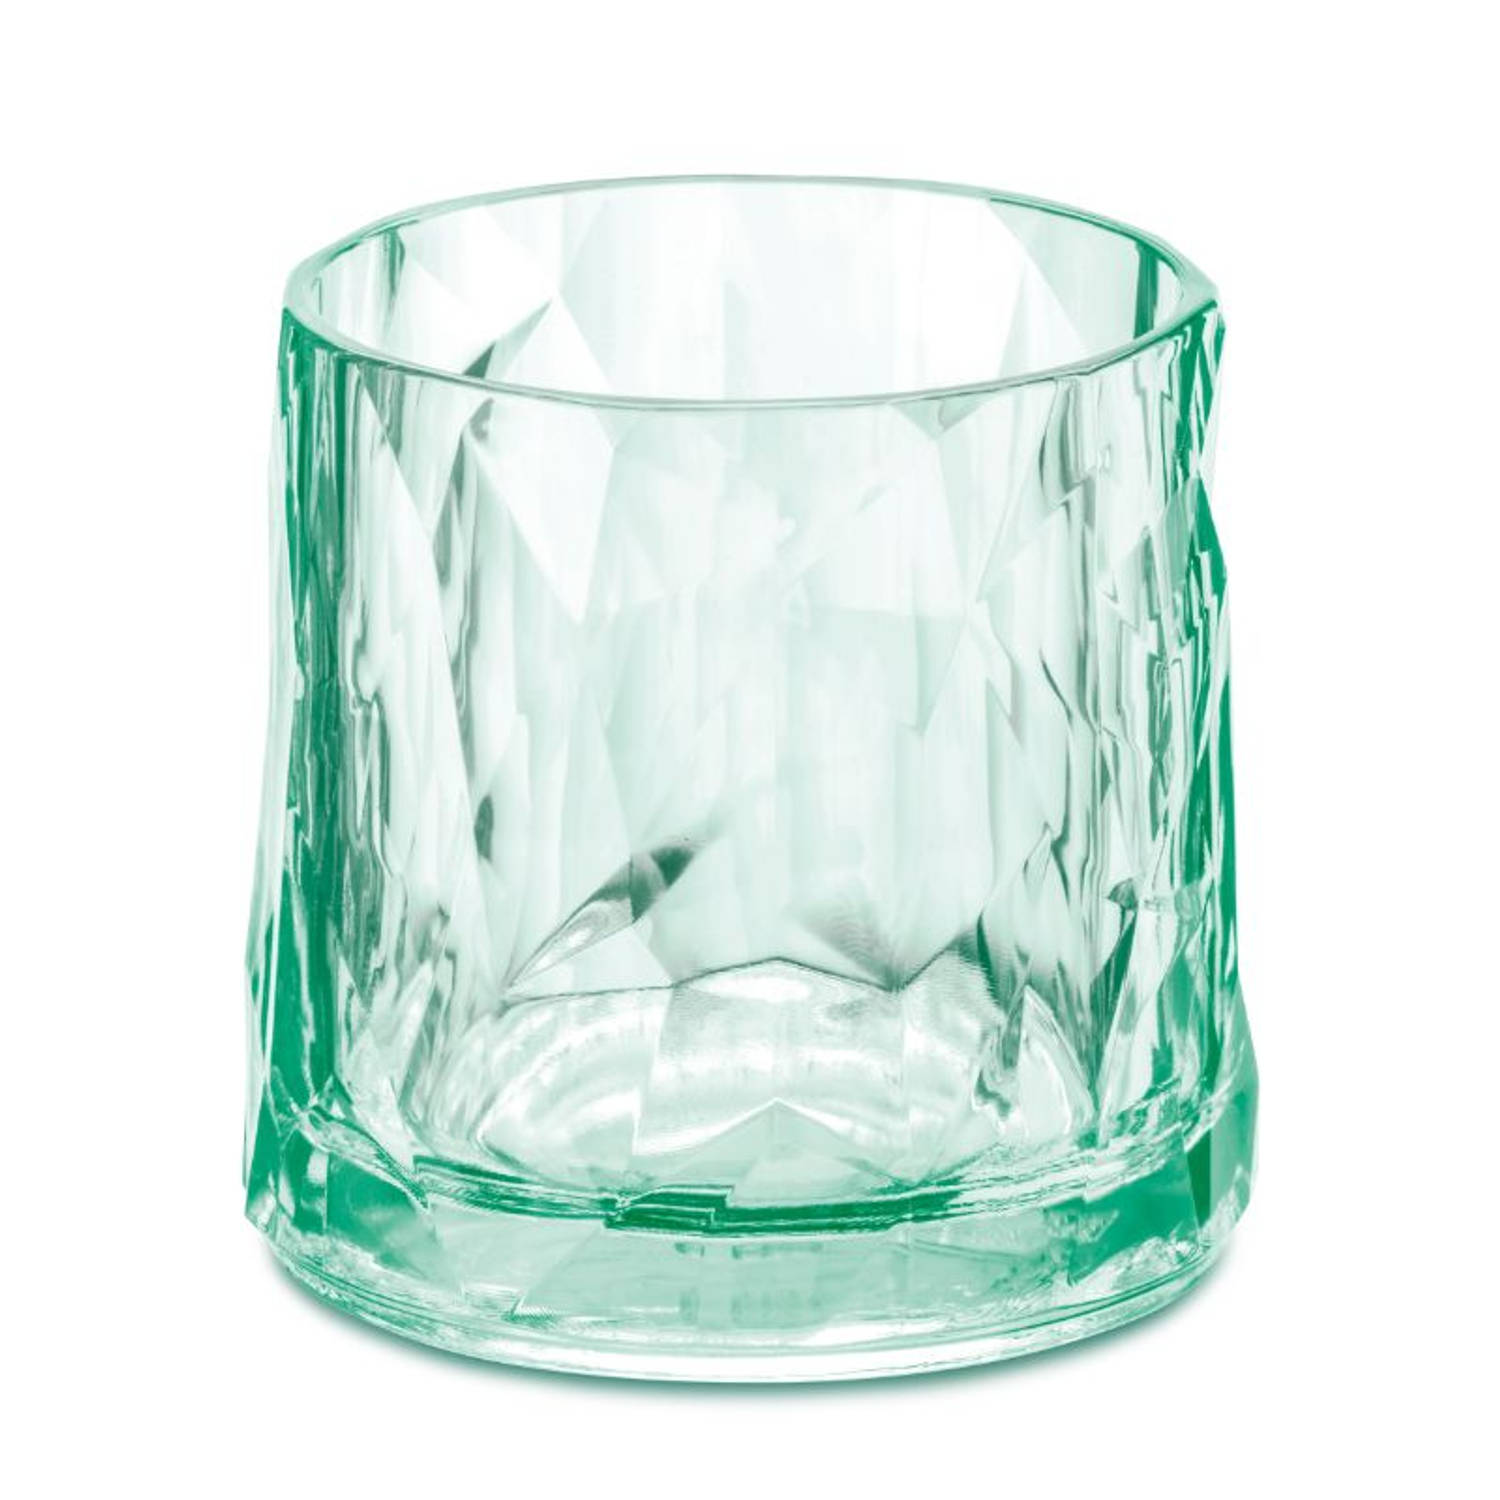 Whiskyglas, 250 ml - Groen - Koziol Club No. 2